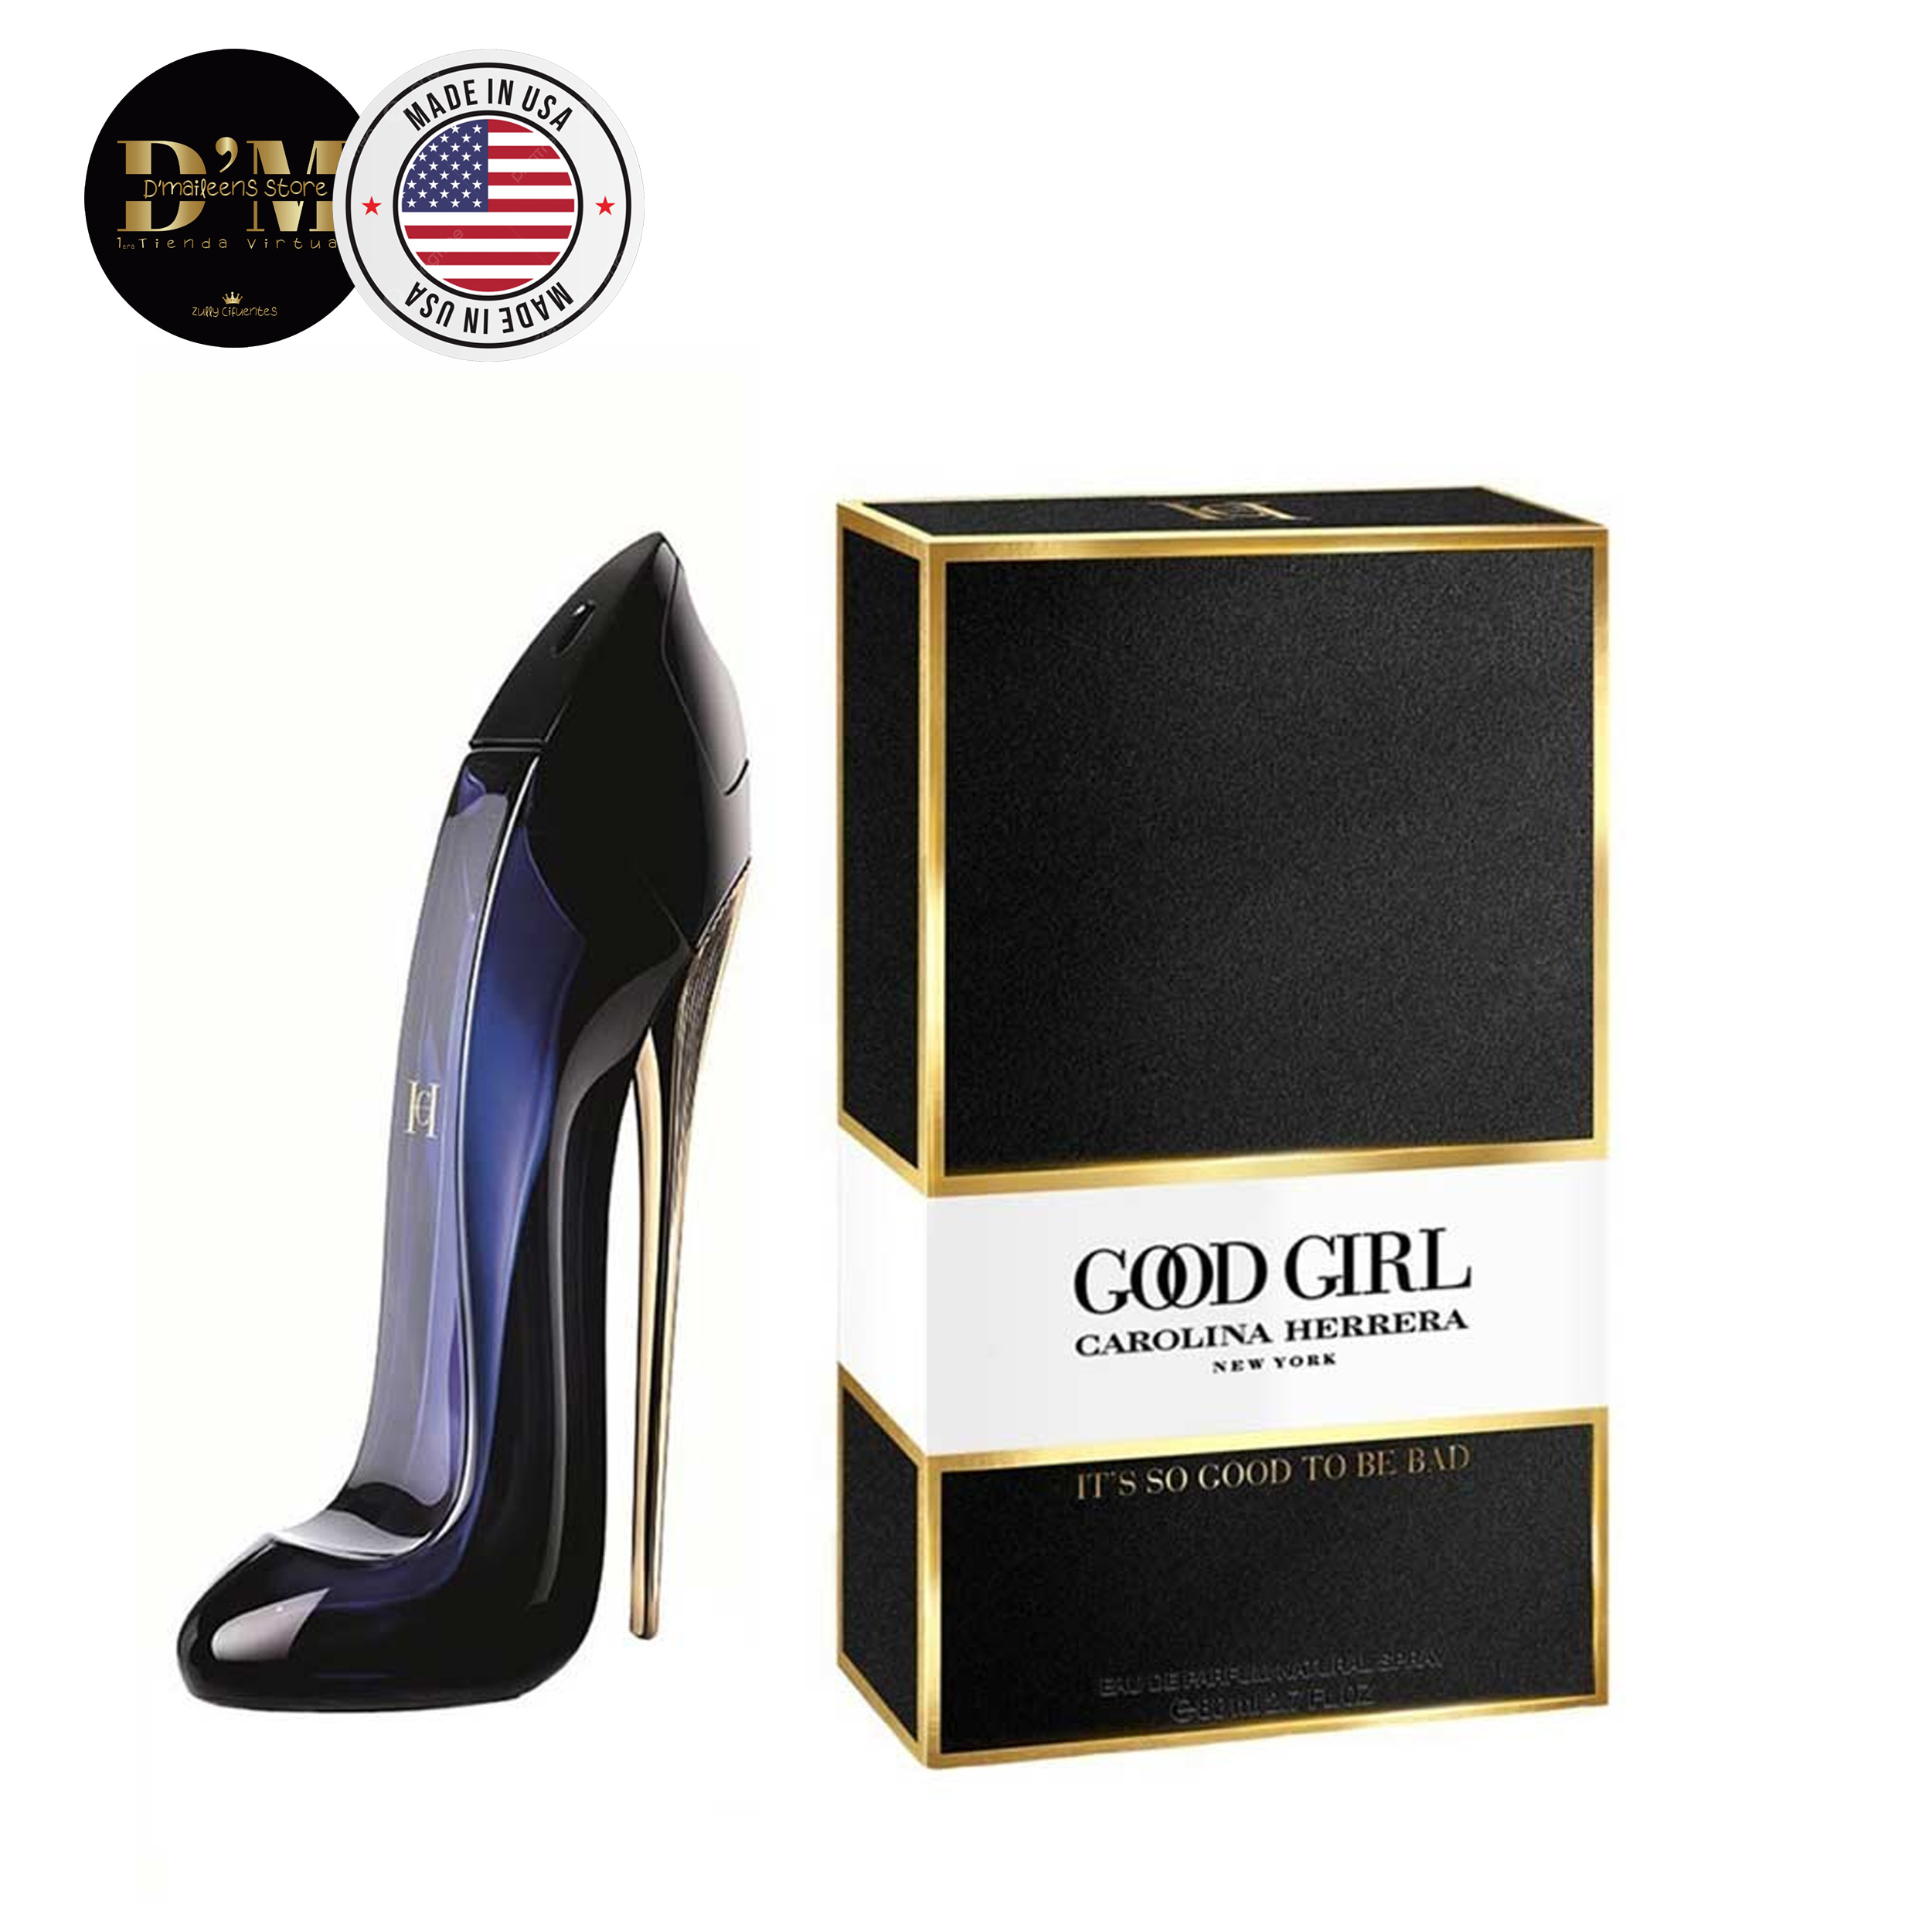 Perfume Good Girl Carolina Herrera     (Replica Con Fragancia Importada)- Mujer